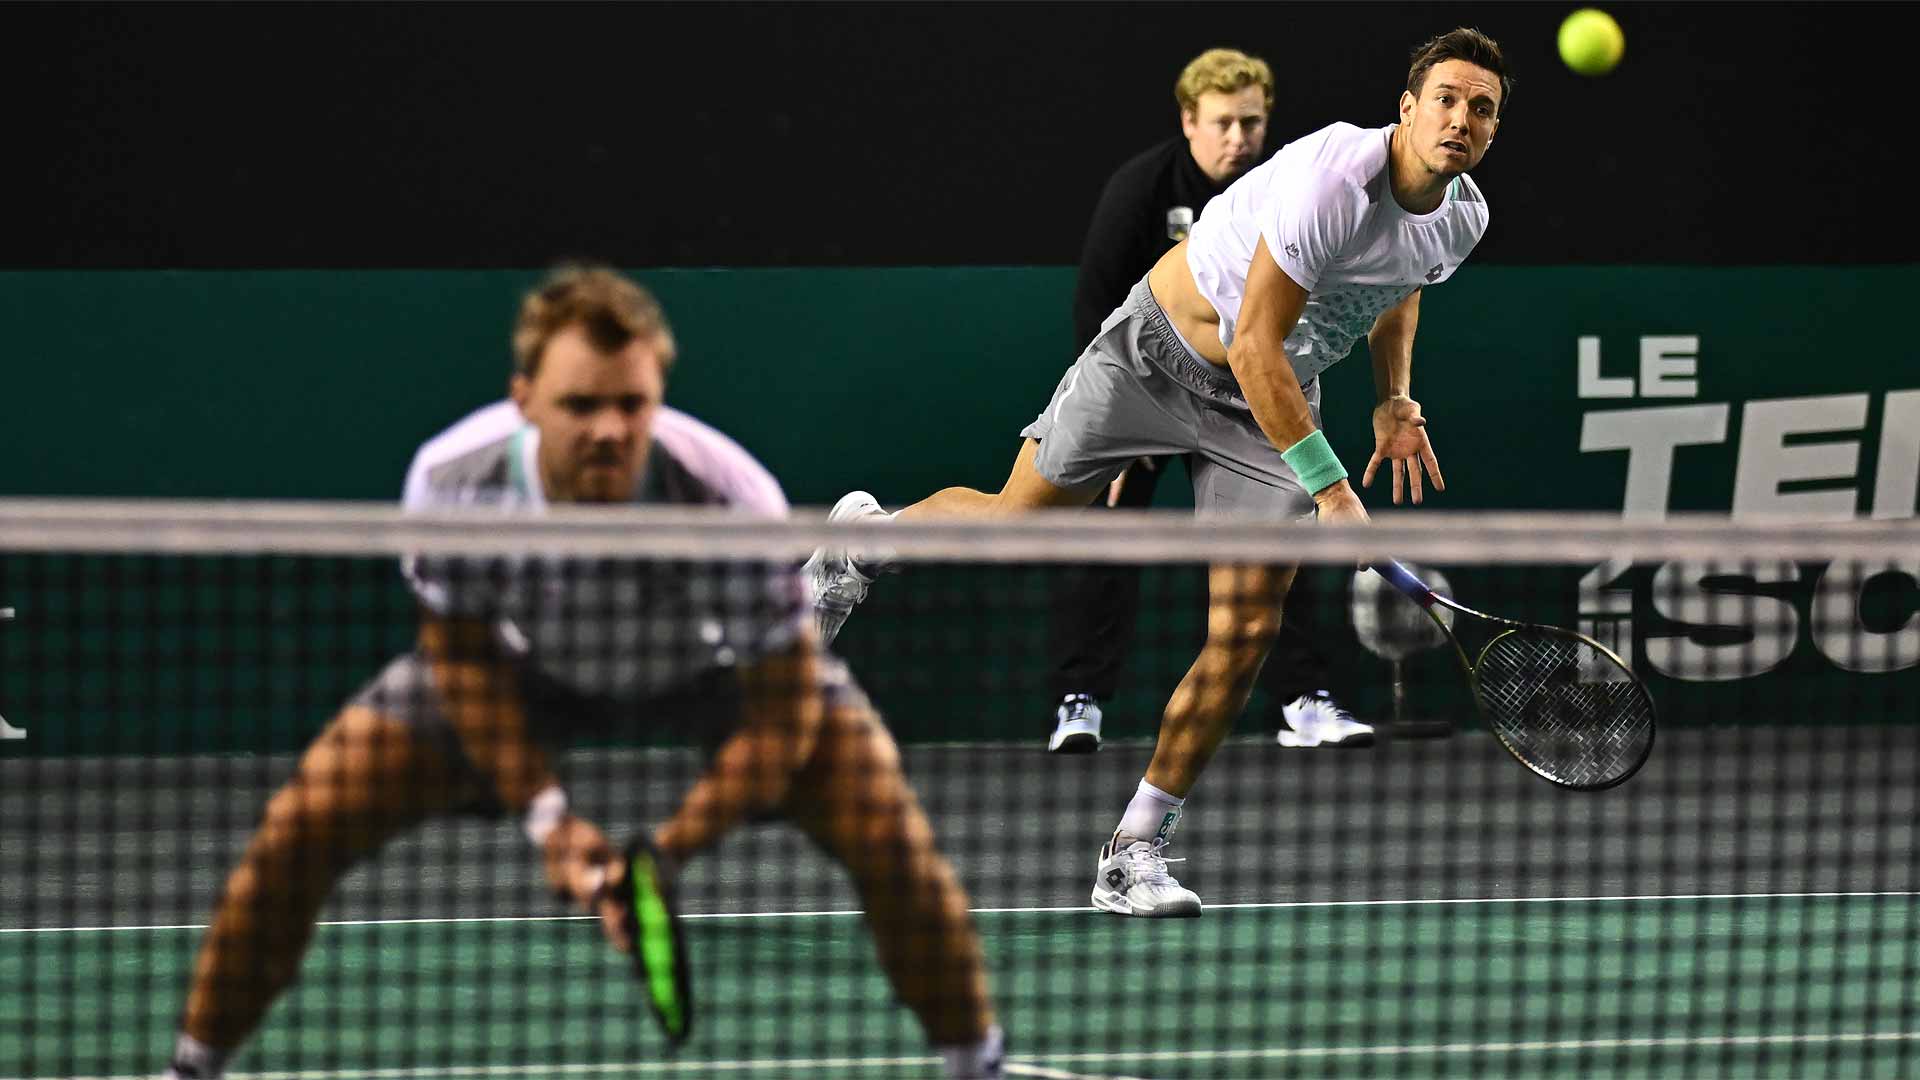 Kevin Krawietz/Andreas Mies Make Winning Start In Paris ATP Tour Tennis